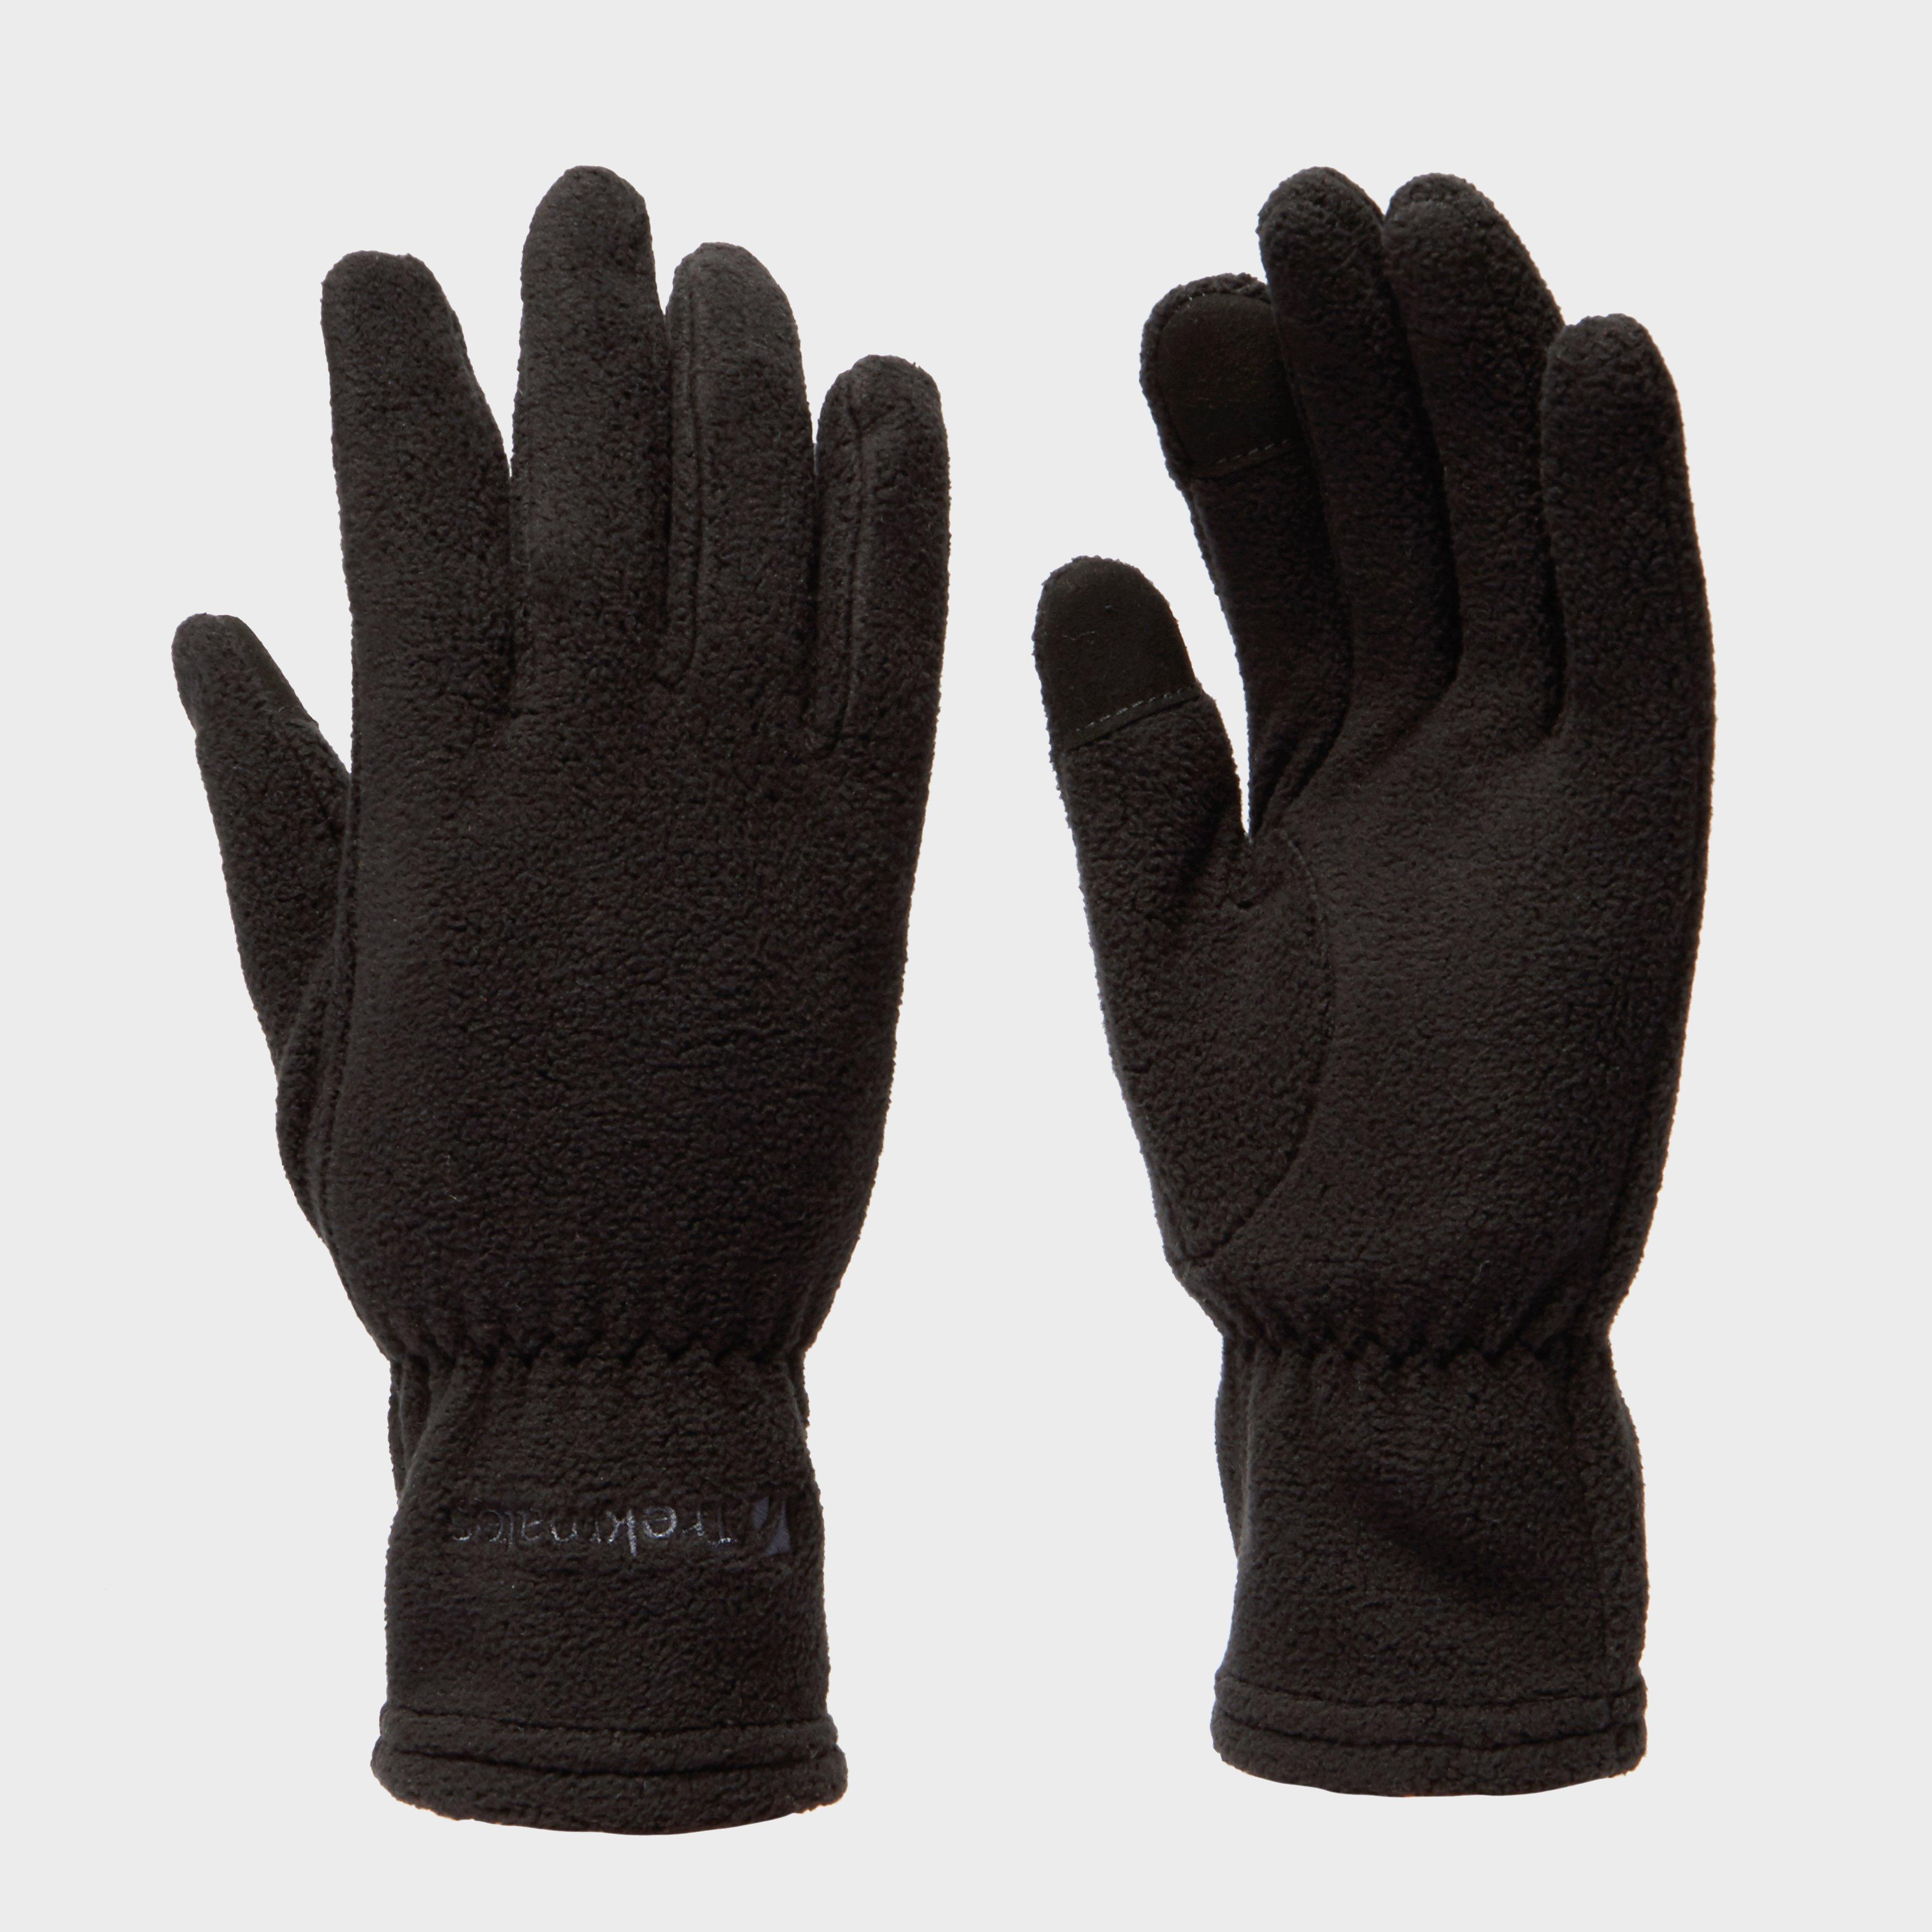 Trekmates Womens Touchscreen Fleece Gloves - Black/blk  Black/blk